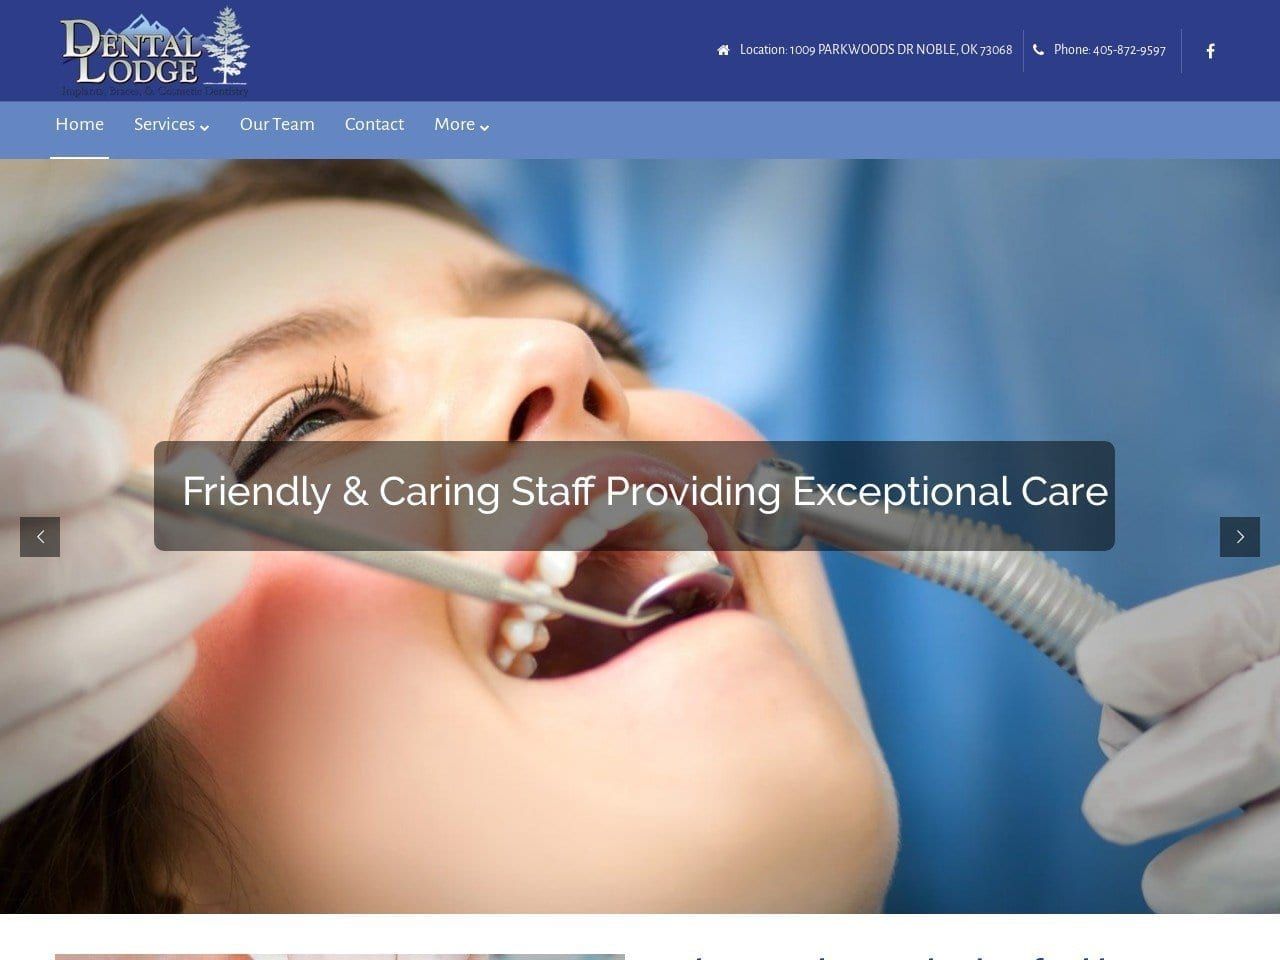 Dental Lodge Website Screenshot from dentallodge.com